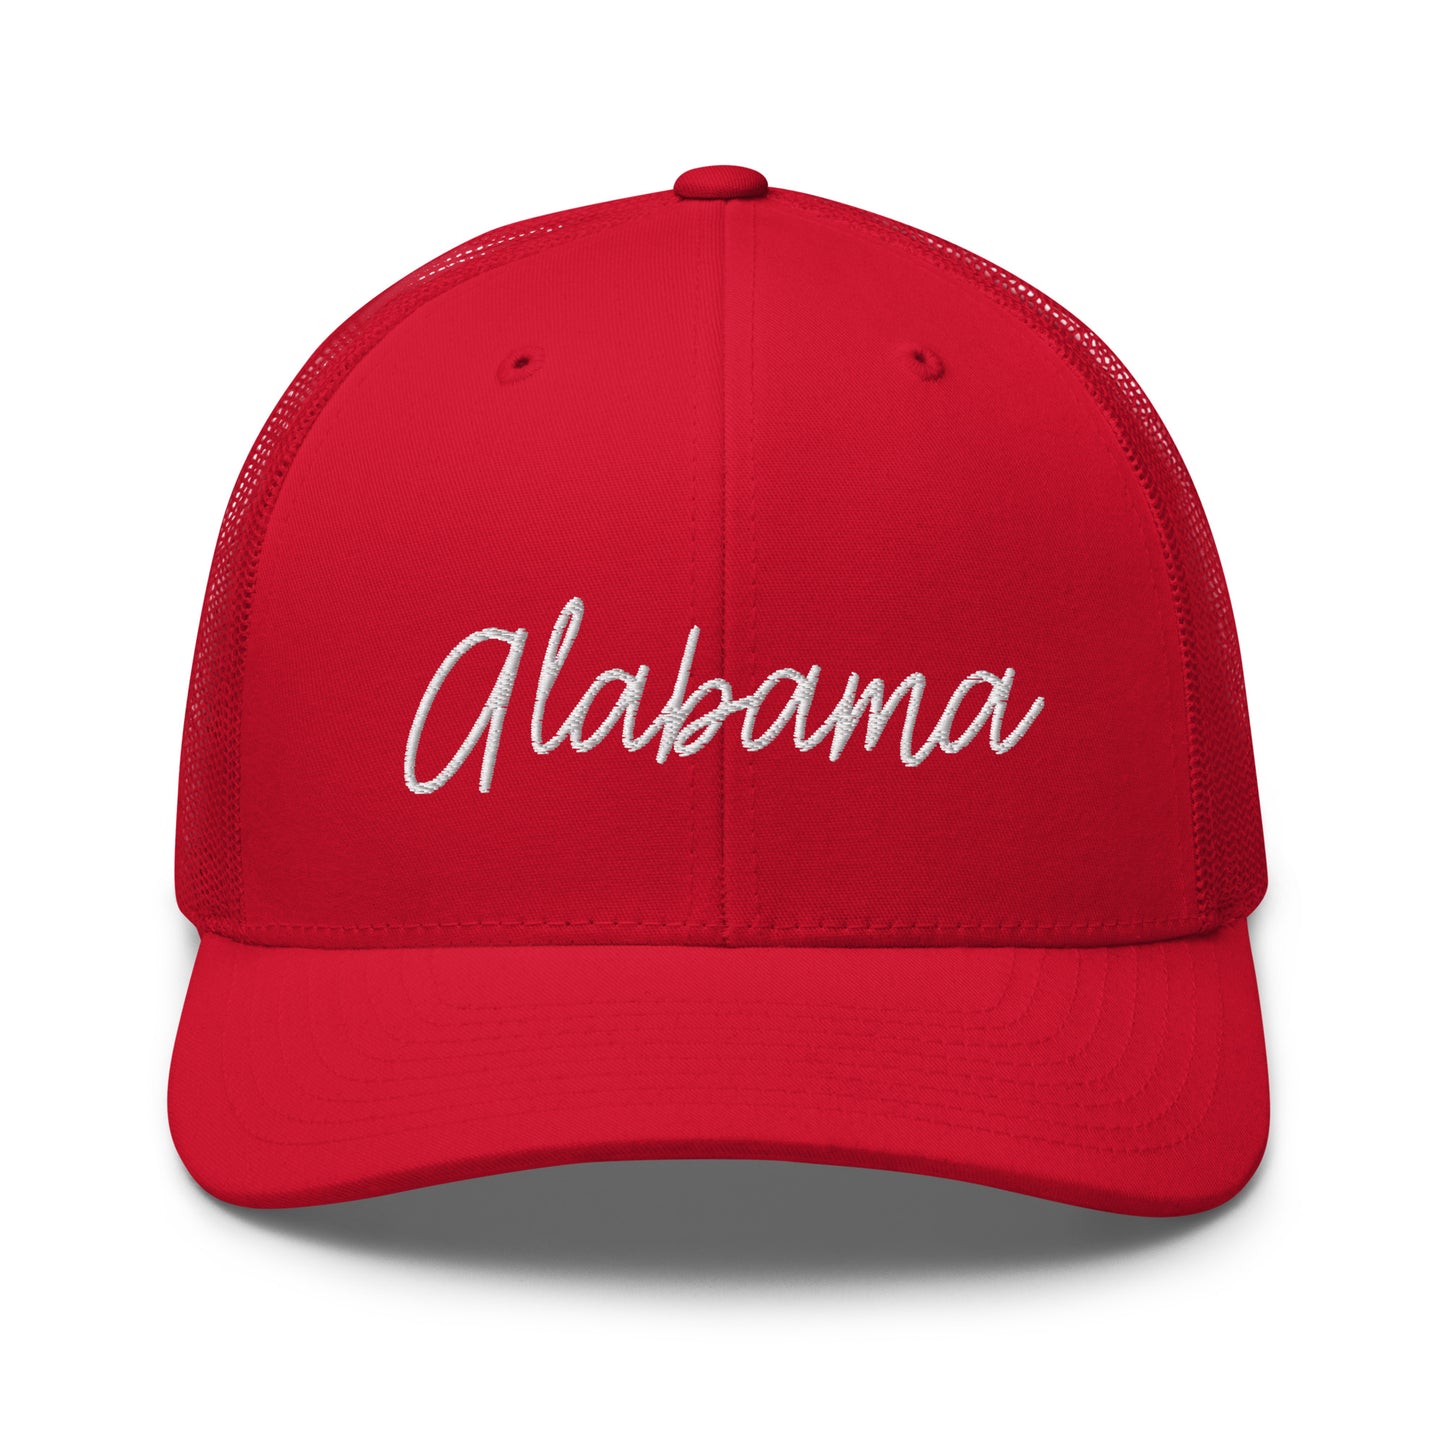 Alabama Retro Script Mid 6 Panel Snapback Trucker Hat